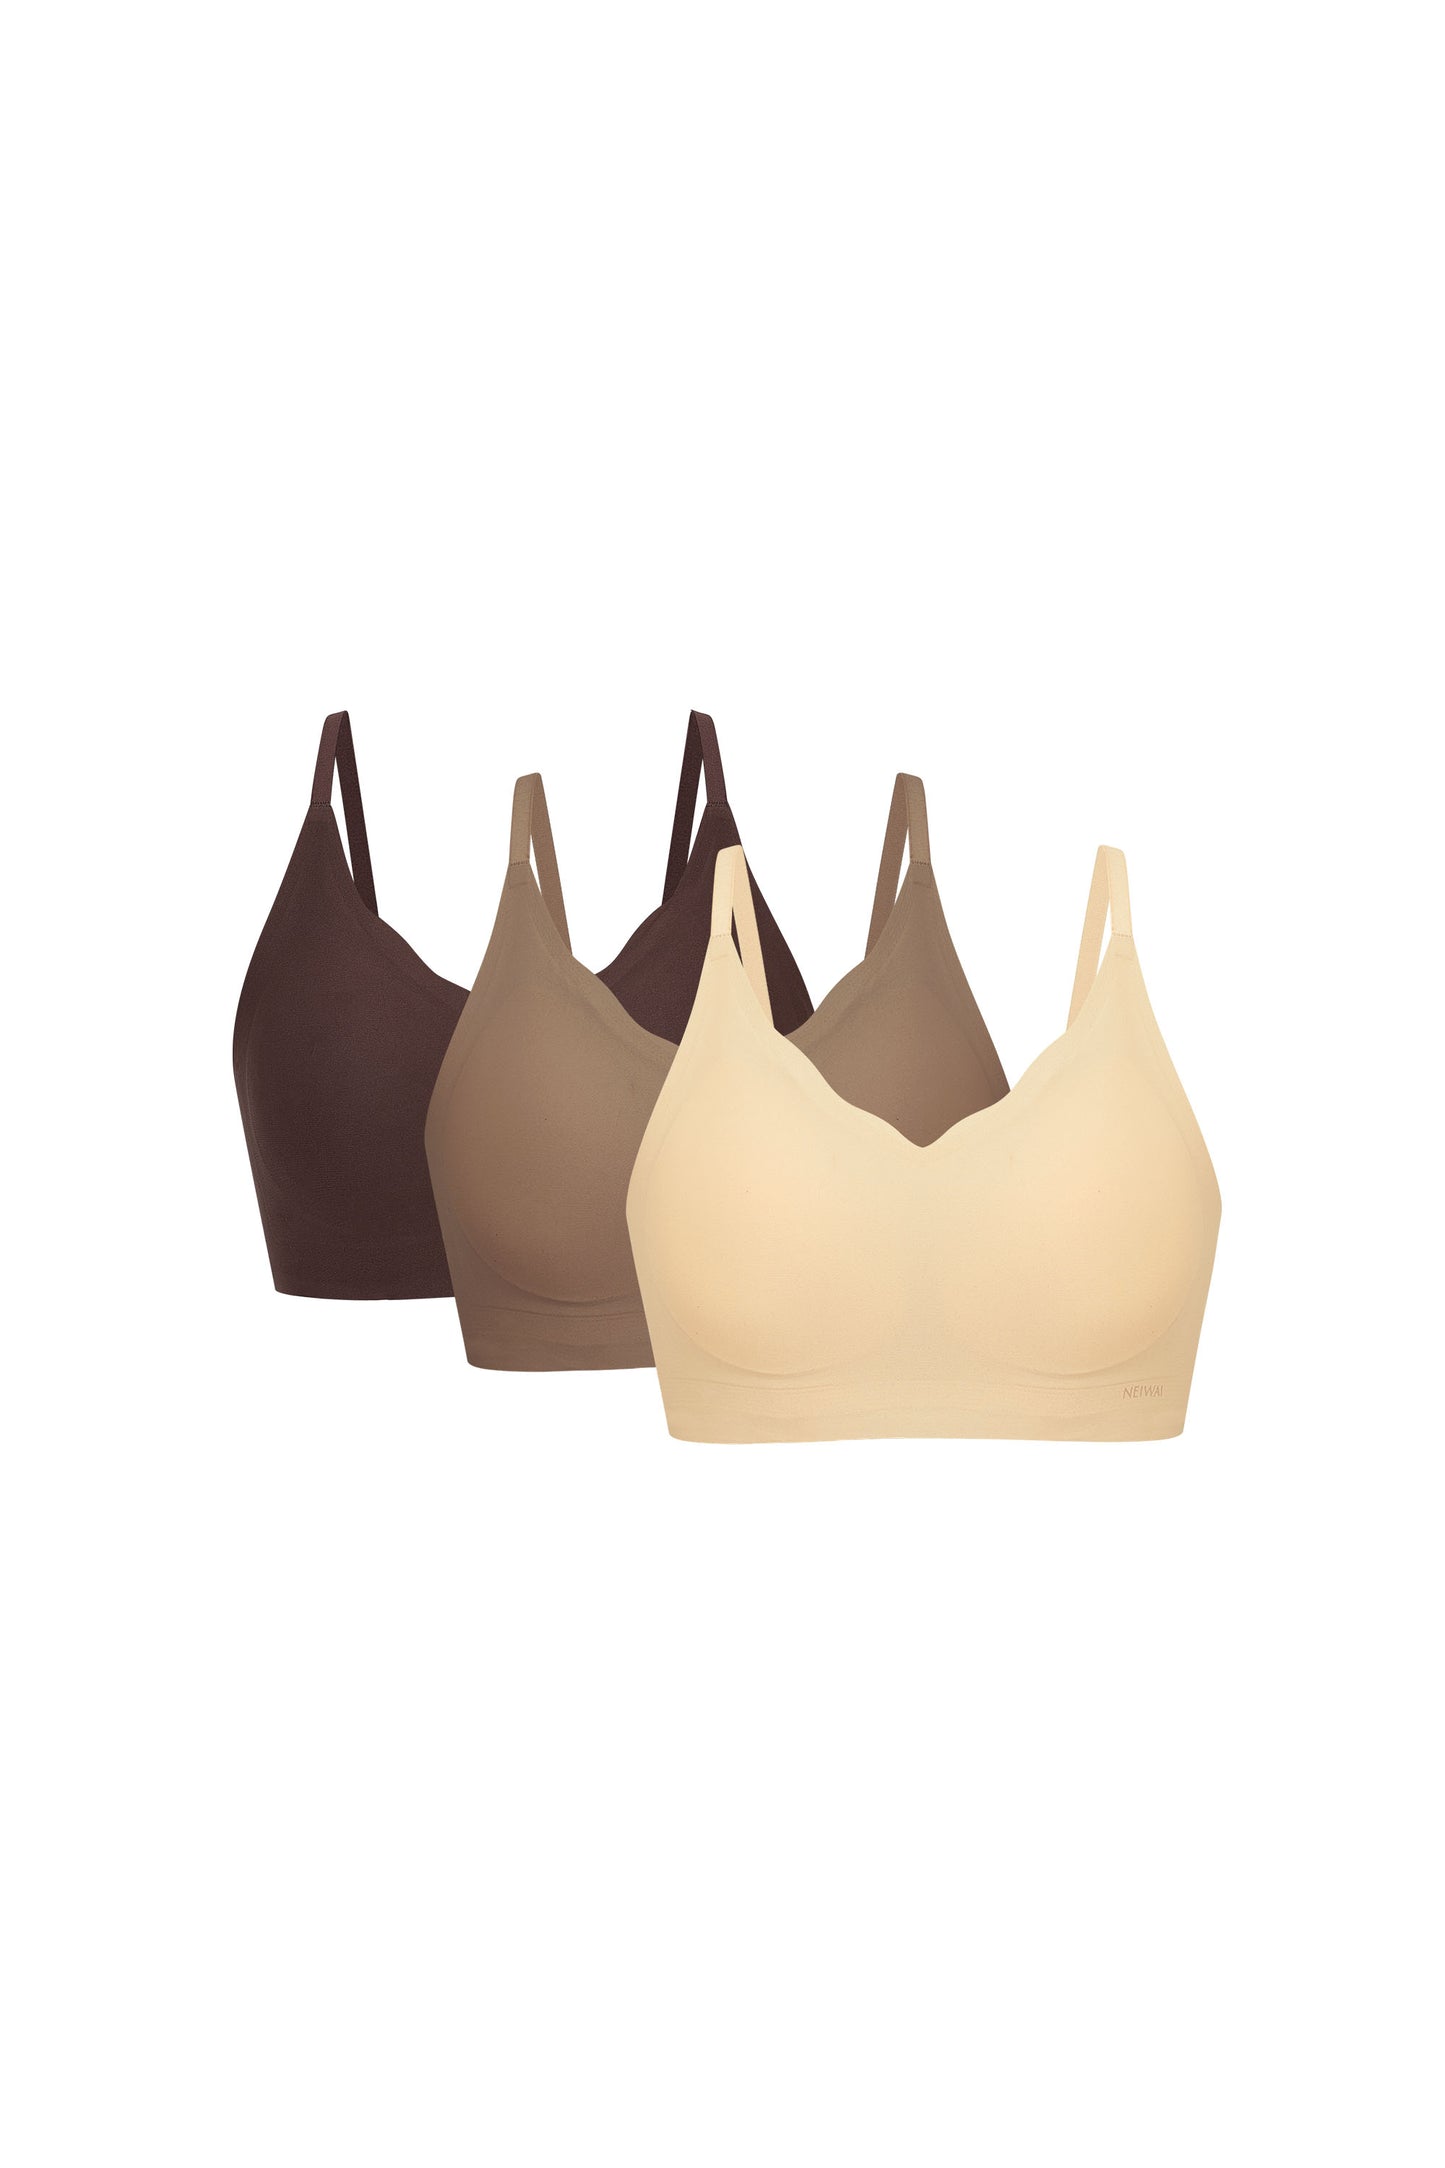 Flat lay image of beige, light brown, and dark brown bras